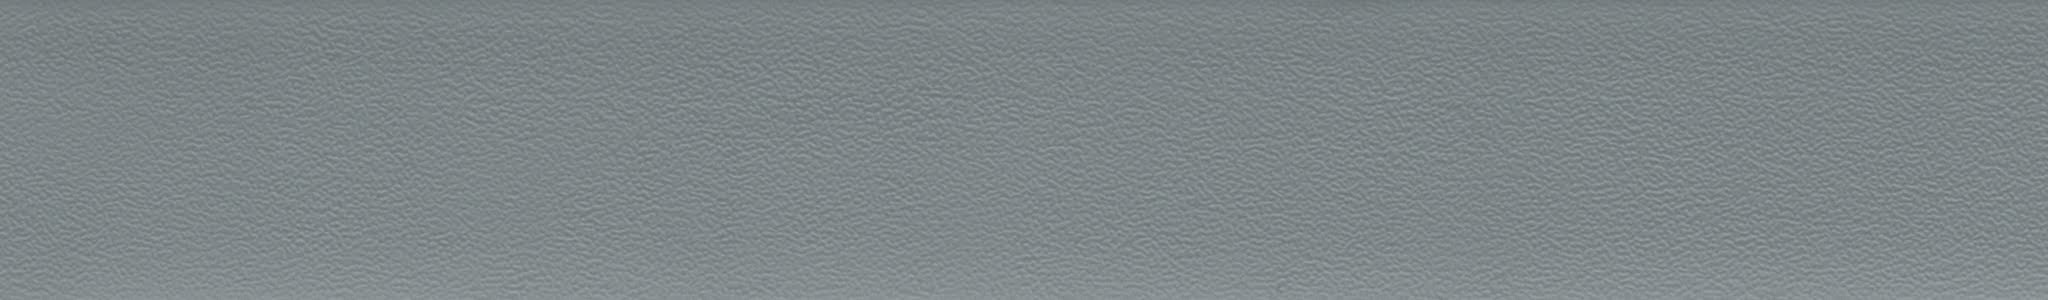 ABS 0162 PE Graphite Grey 22x2mm HU 172162